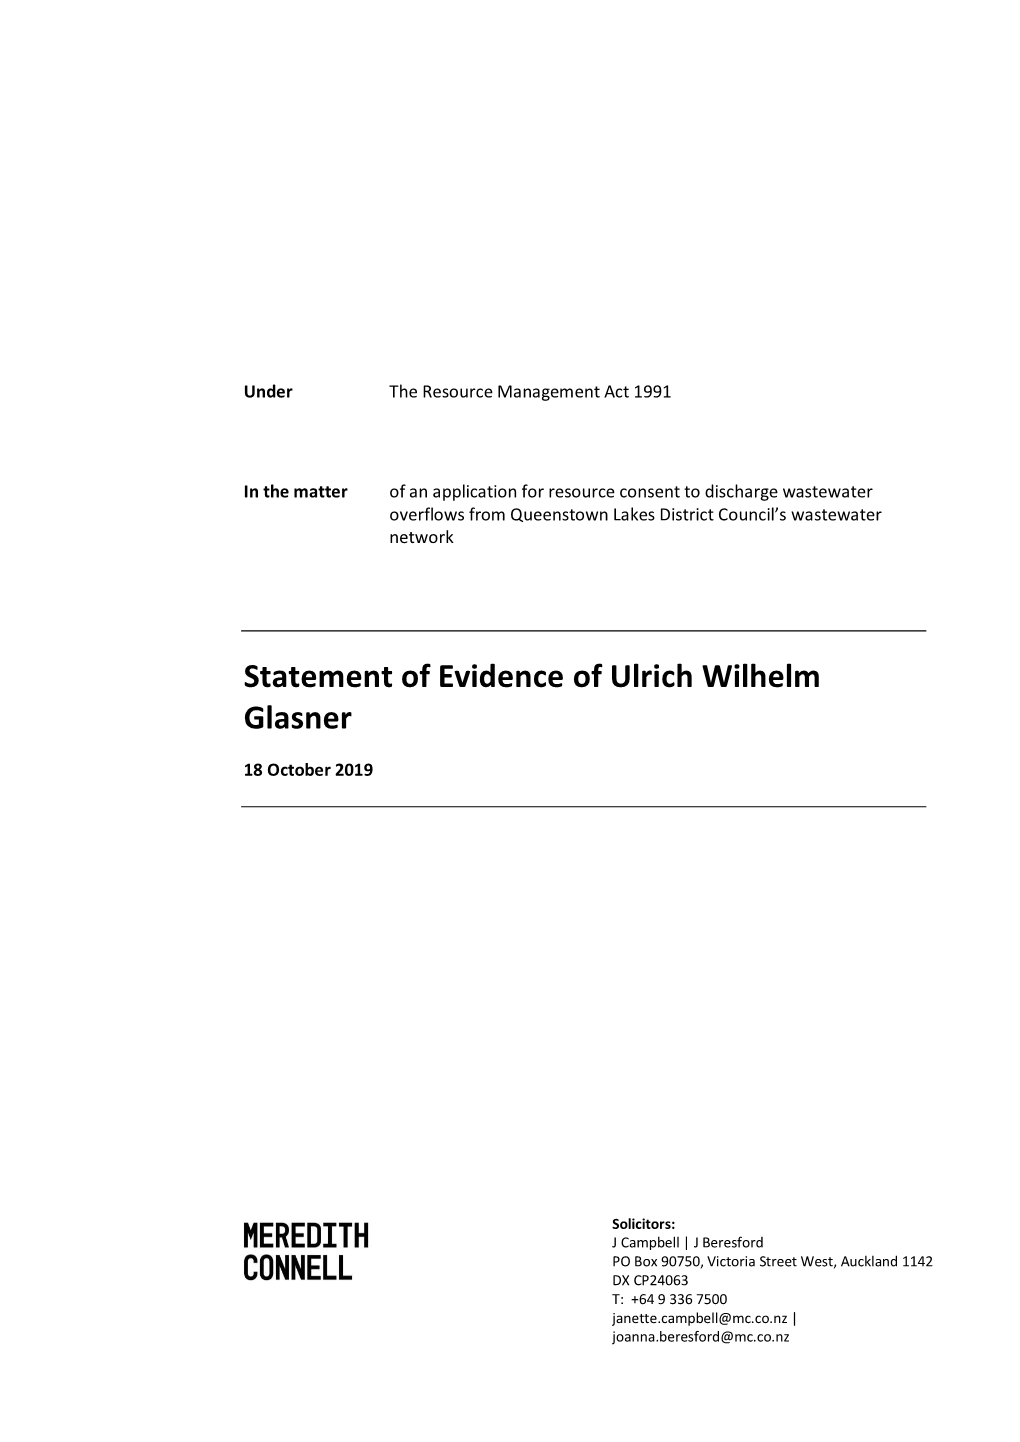 Statement of Evidence of Ulrich Wilhelm Glasner